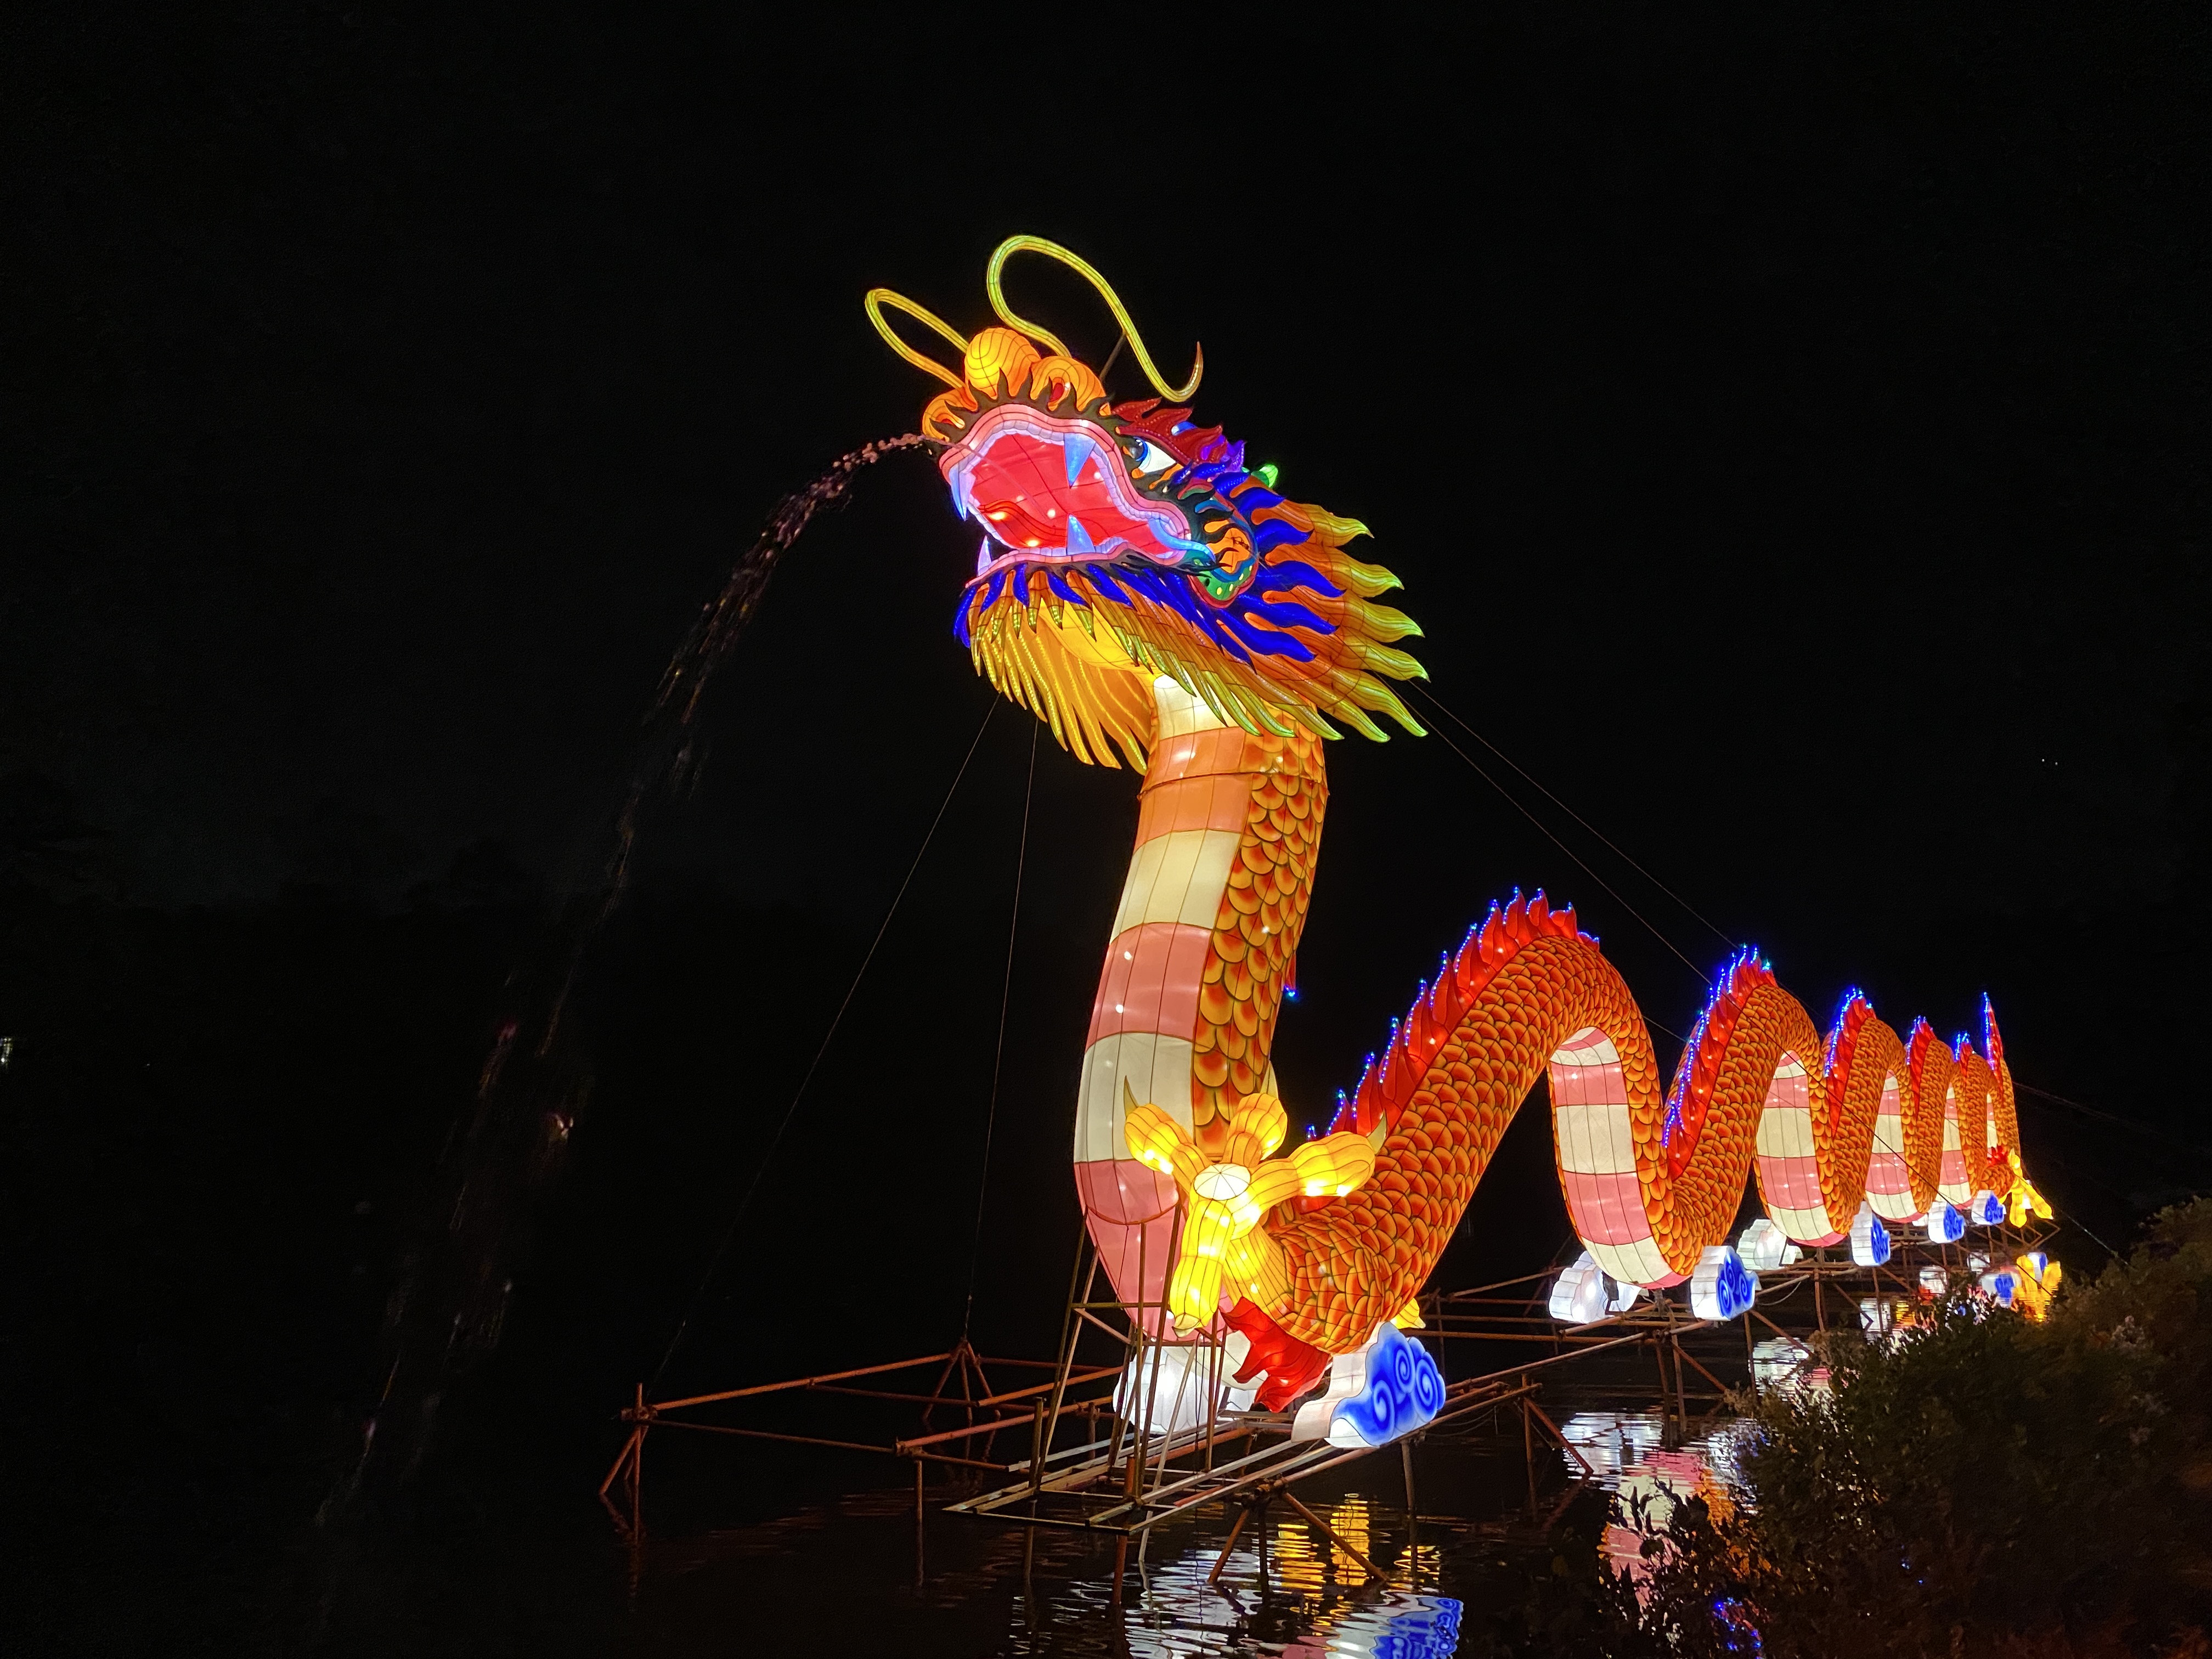 My Trip To The North Carolina Chinese Lantern Festival